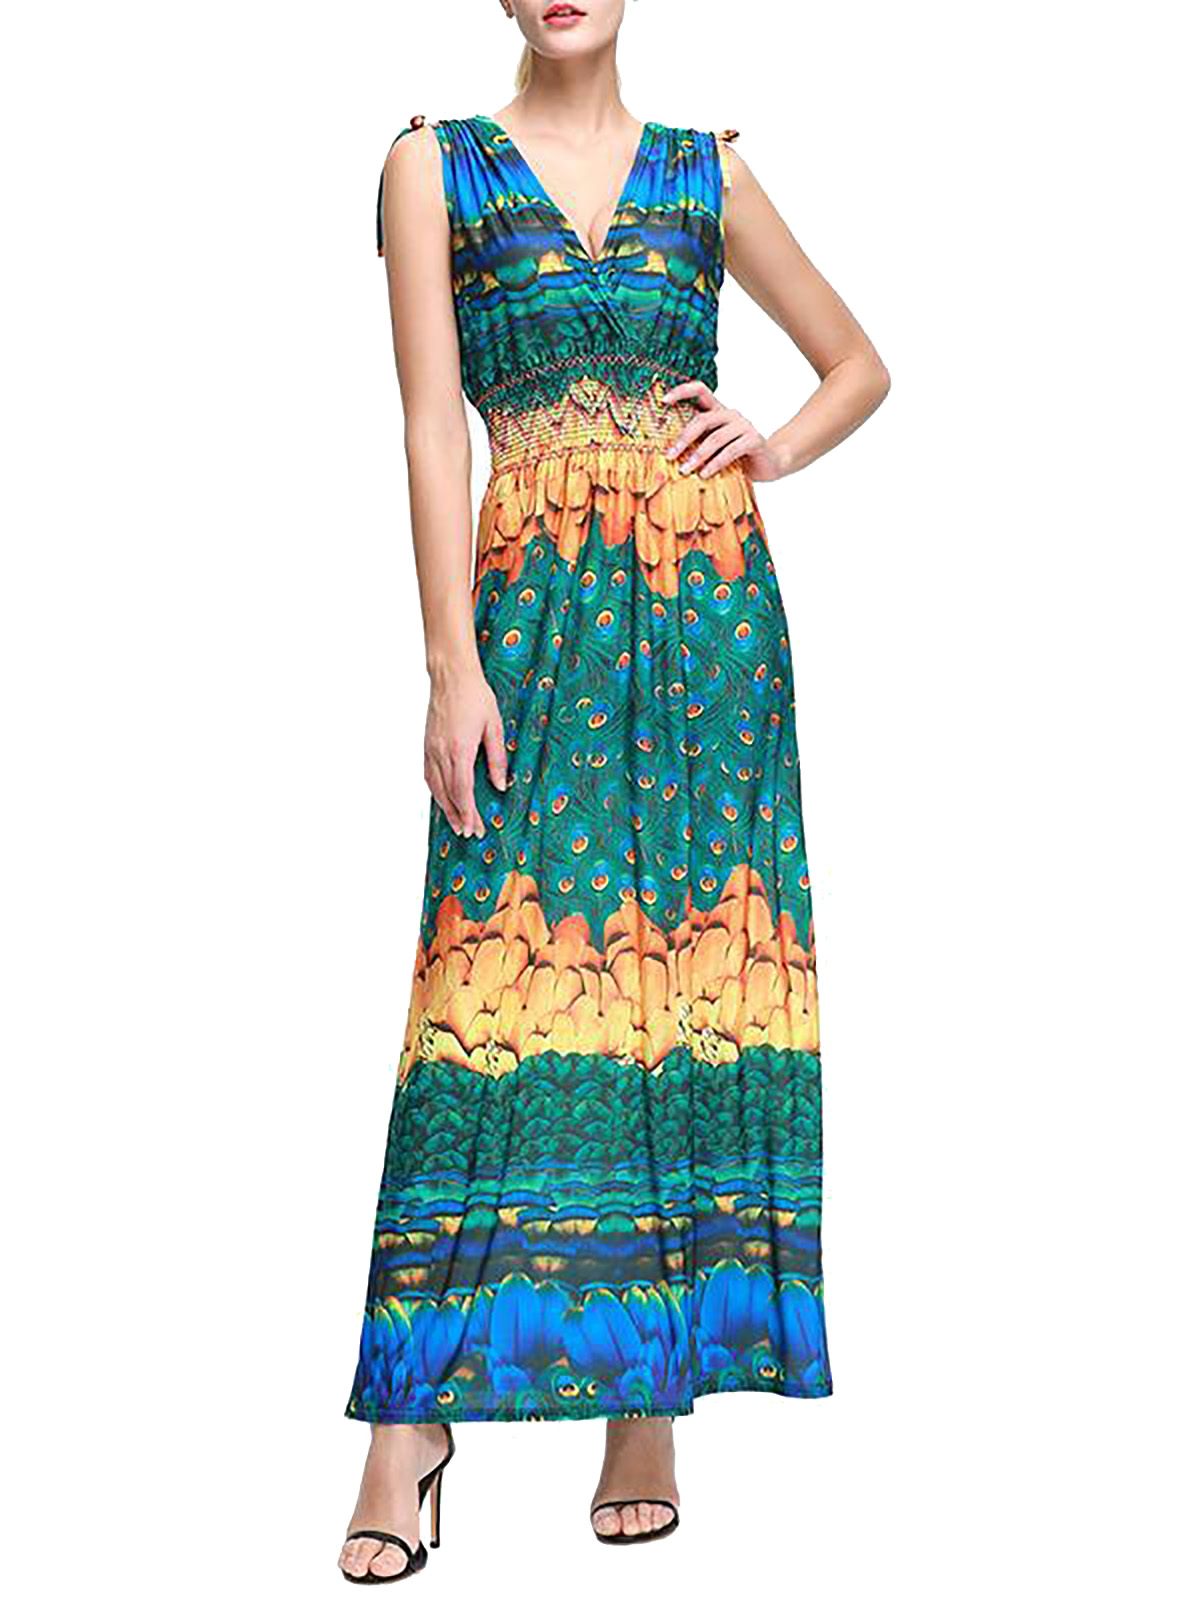 Wantdo - - Wantdo BLUE Peacock Print Sleeveless Maxi Dress - Plus Size ...